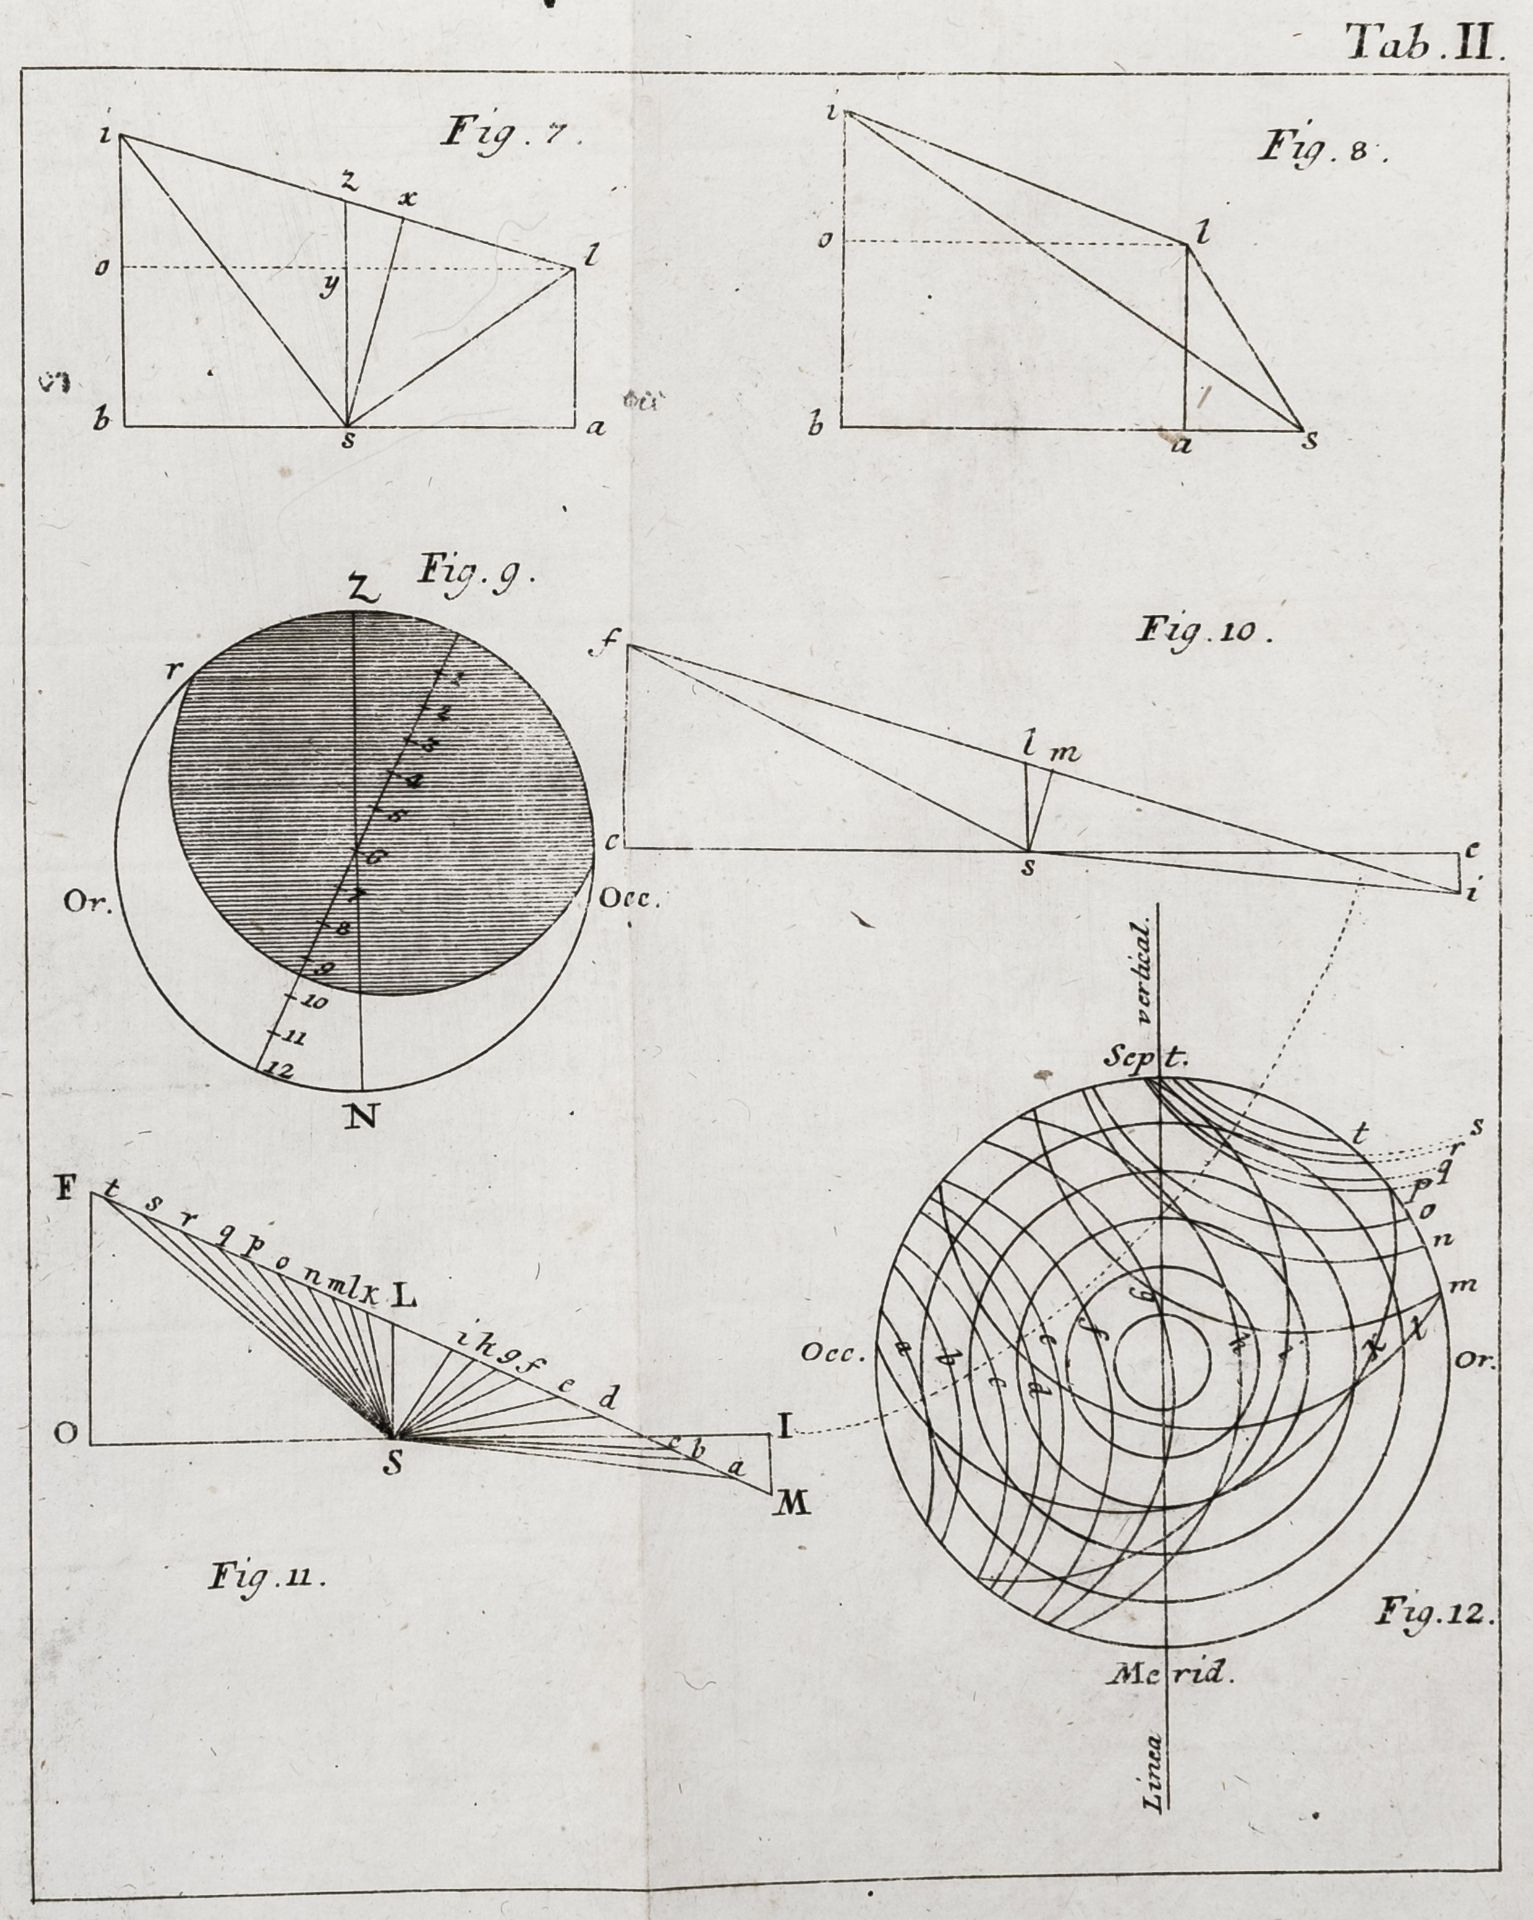 Astronomie - - Fixlmillner, Placido. - Image 2 of 3